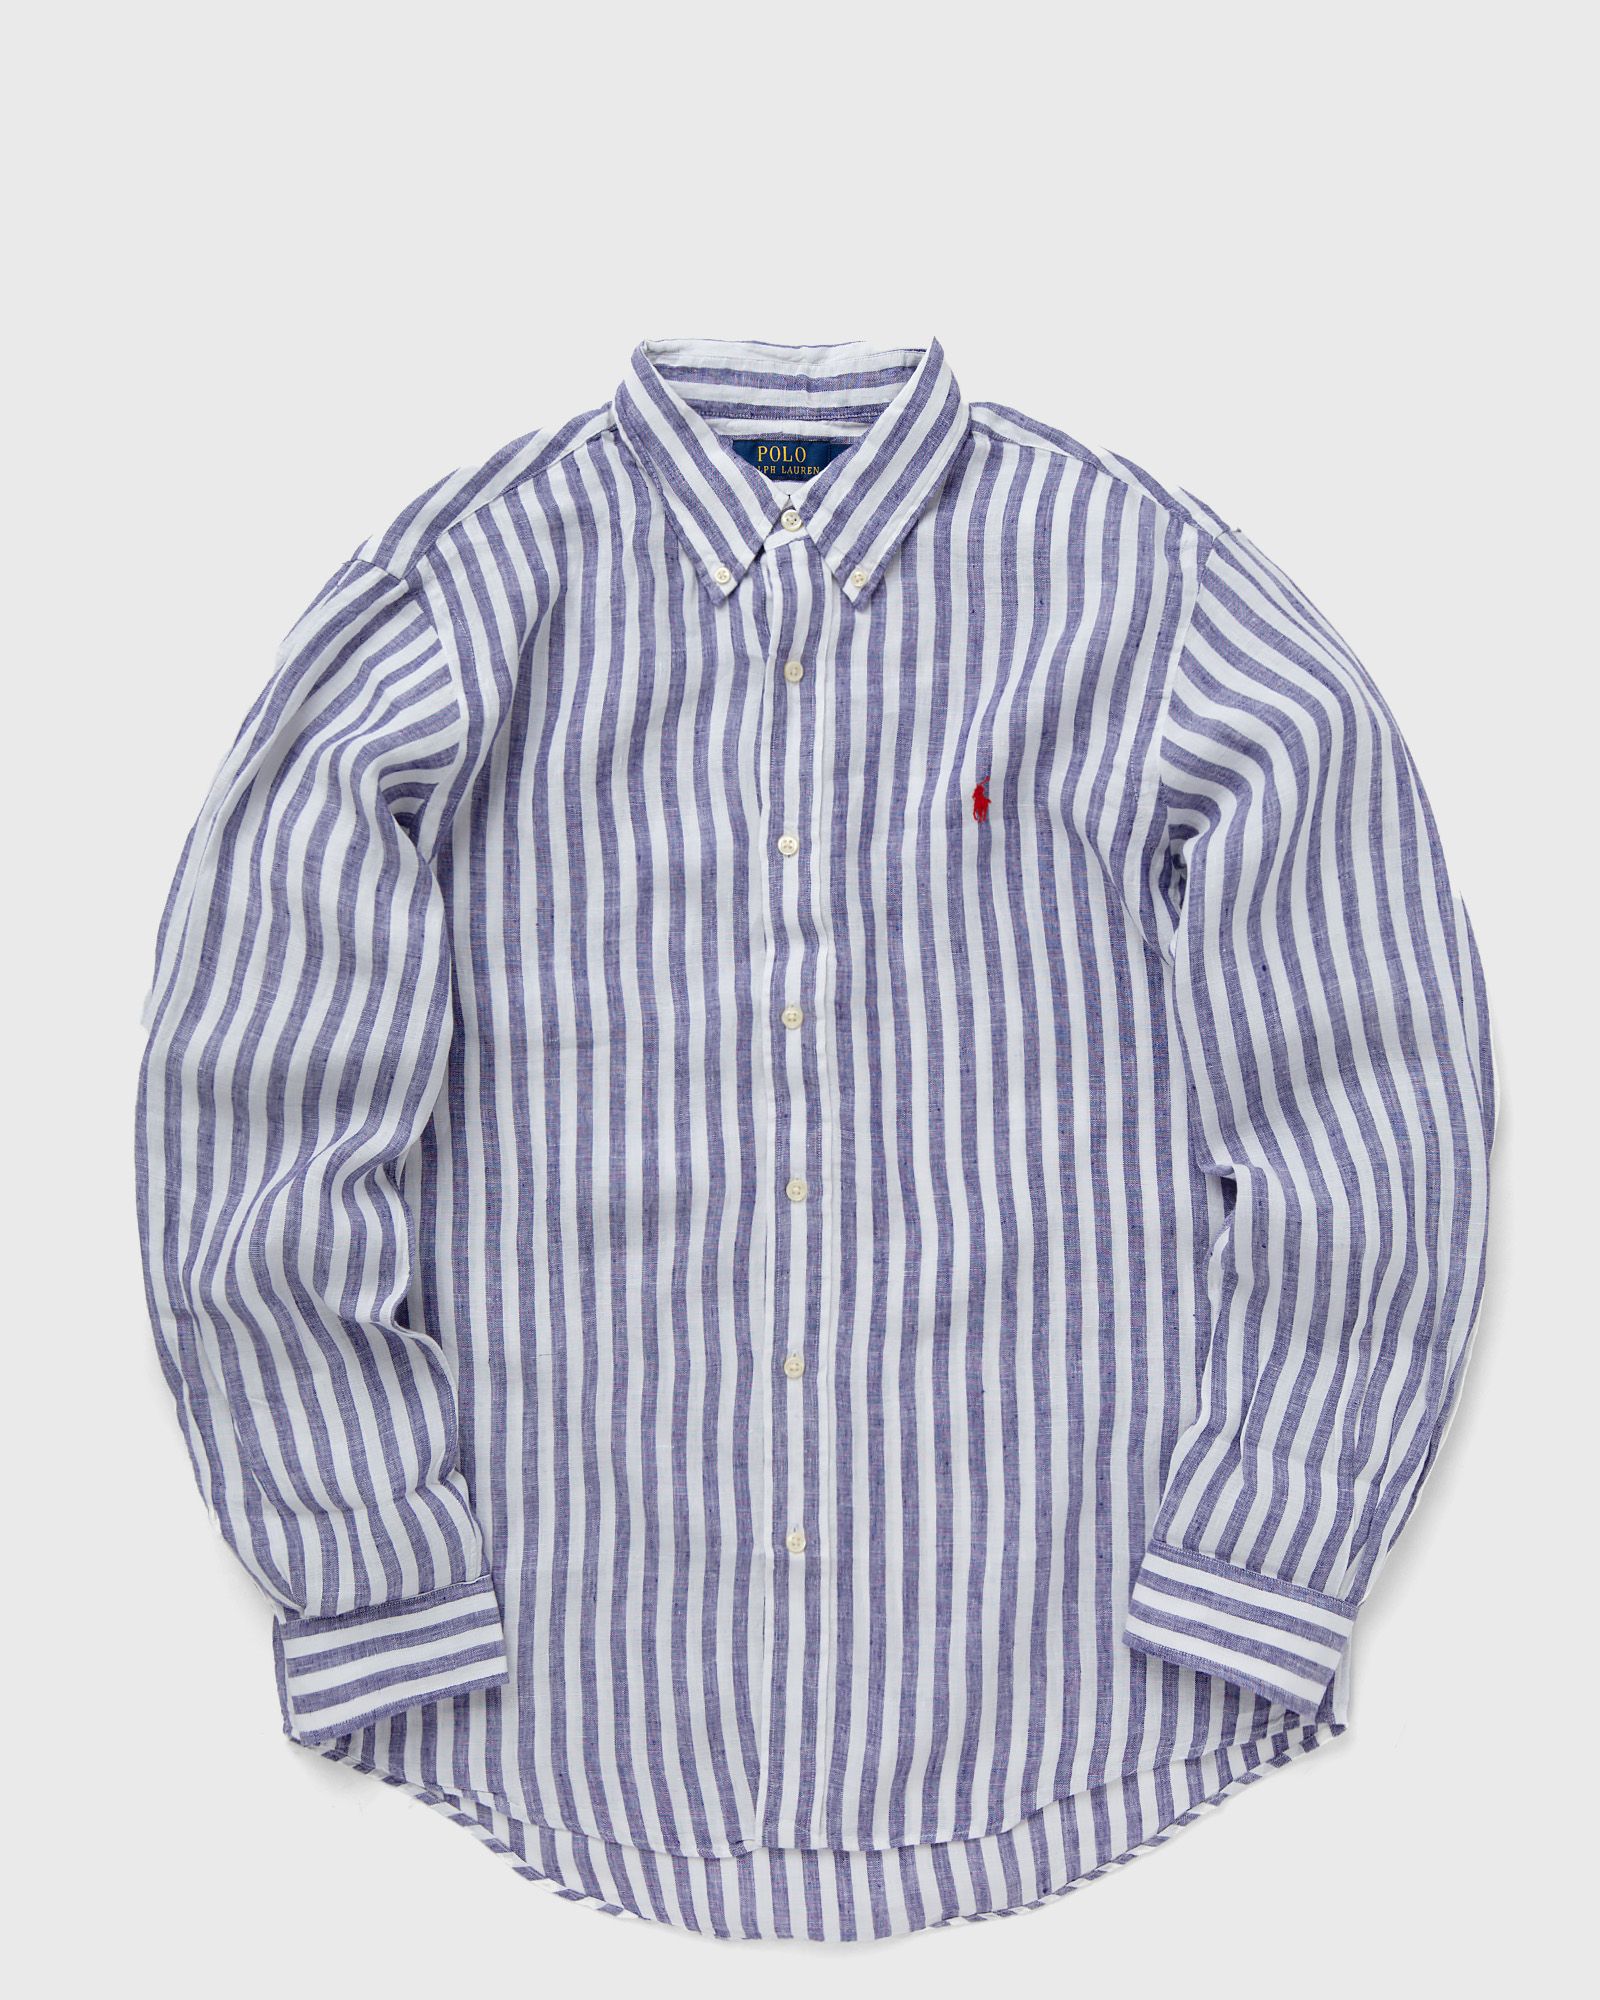 Polo Ralph Lauren - long sleeve-sport shirt men longsleeves blue|white in größe:xxl